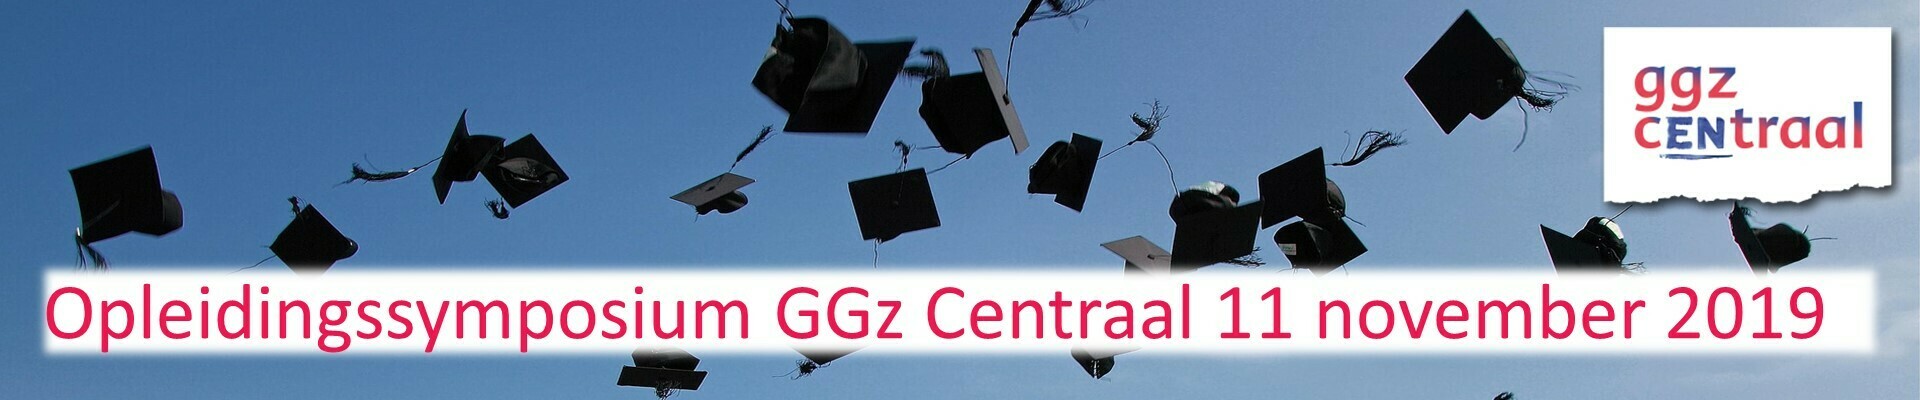 Opleidingssymposium GGz Centraal